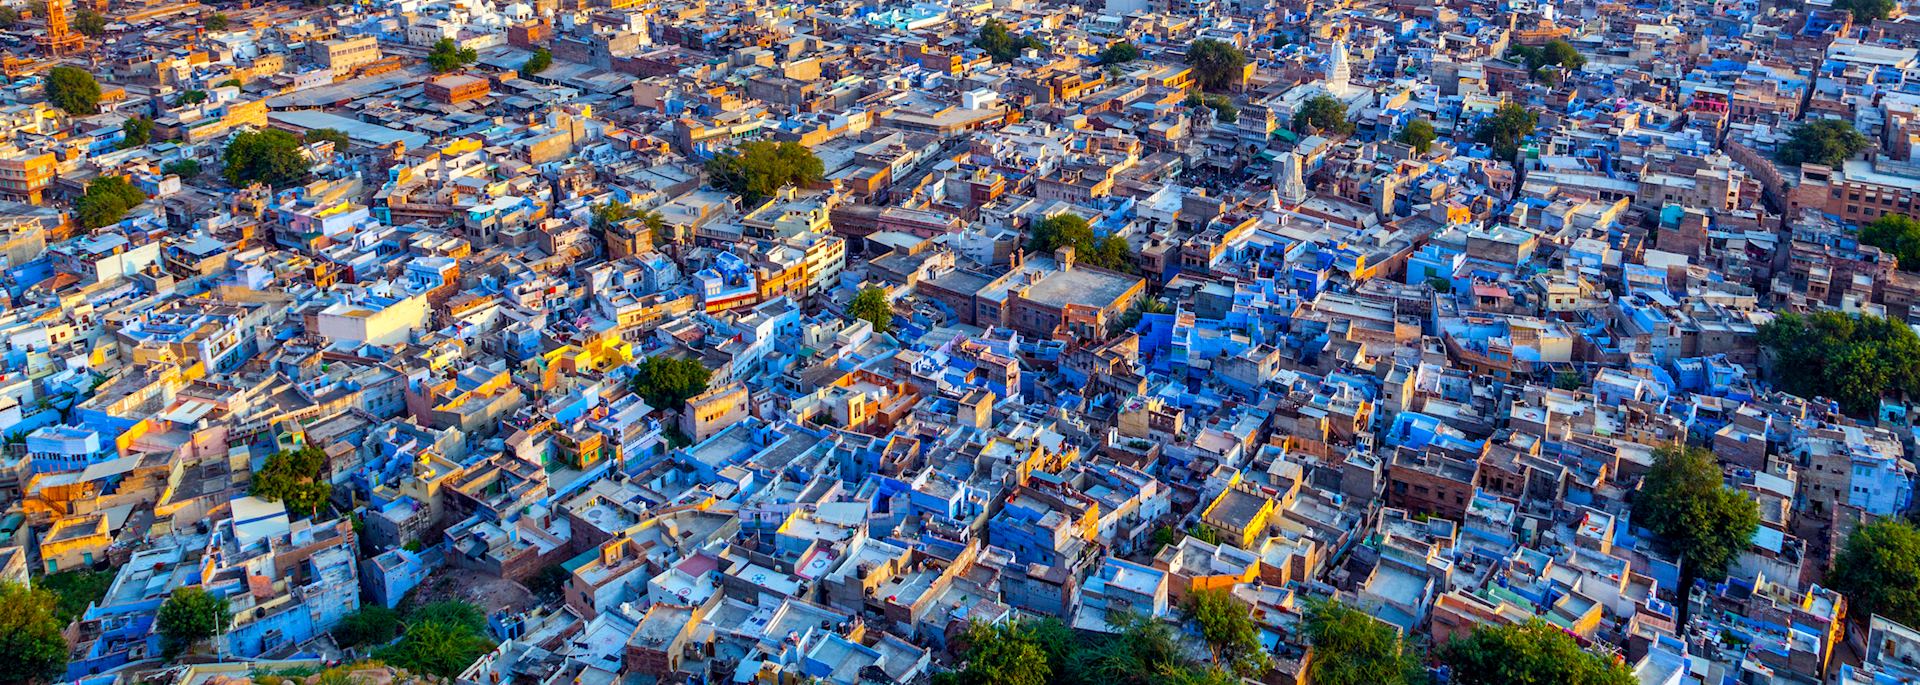 The blue city of Jodhpur, Rajasthan